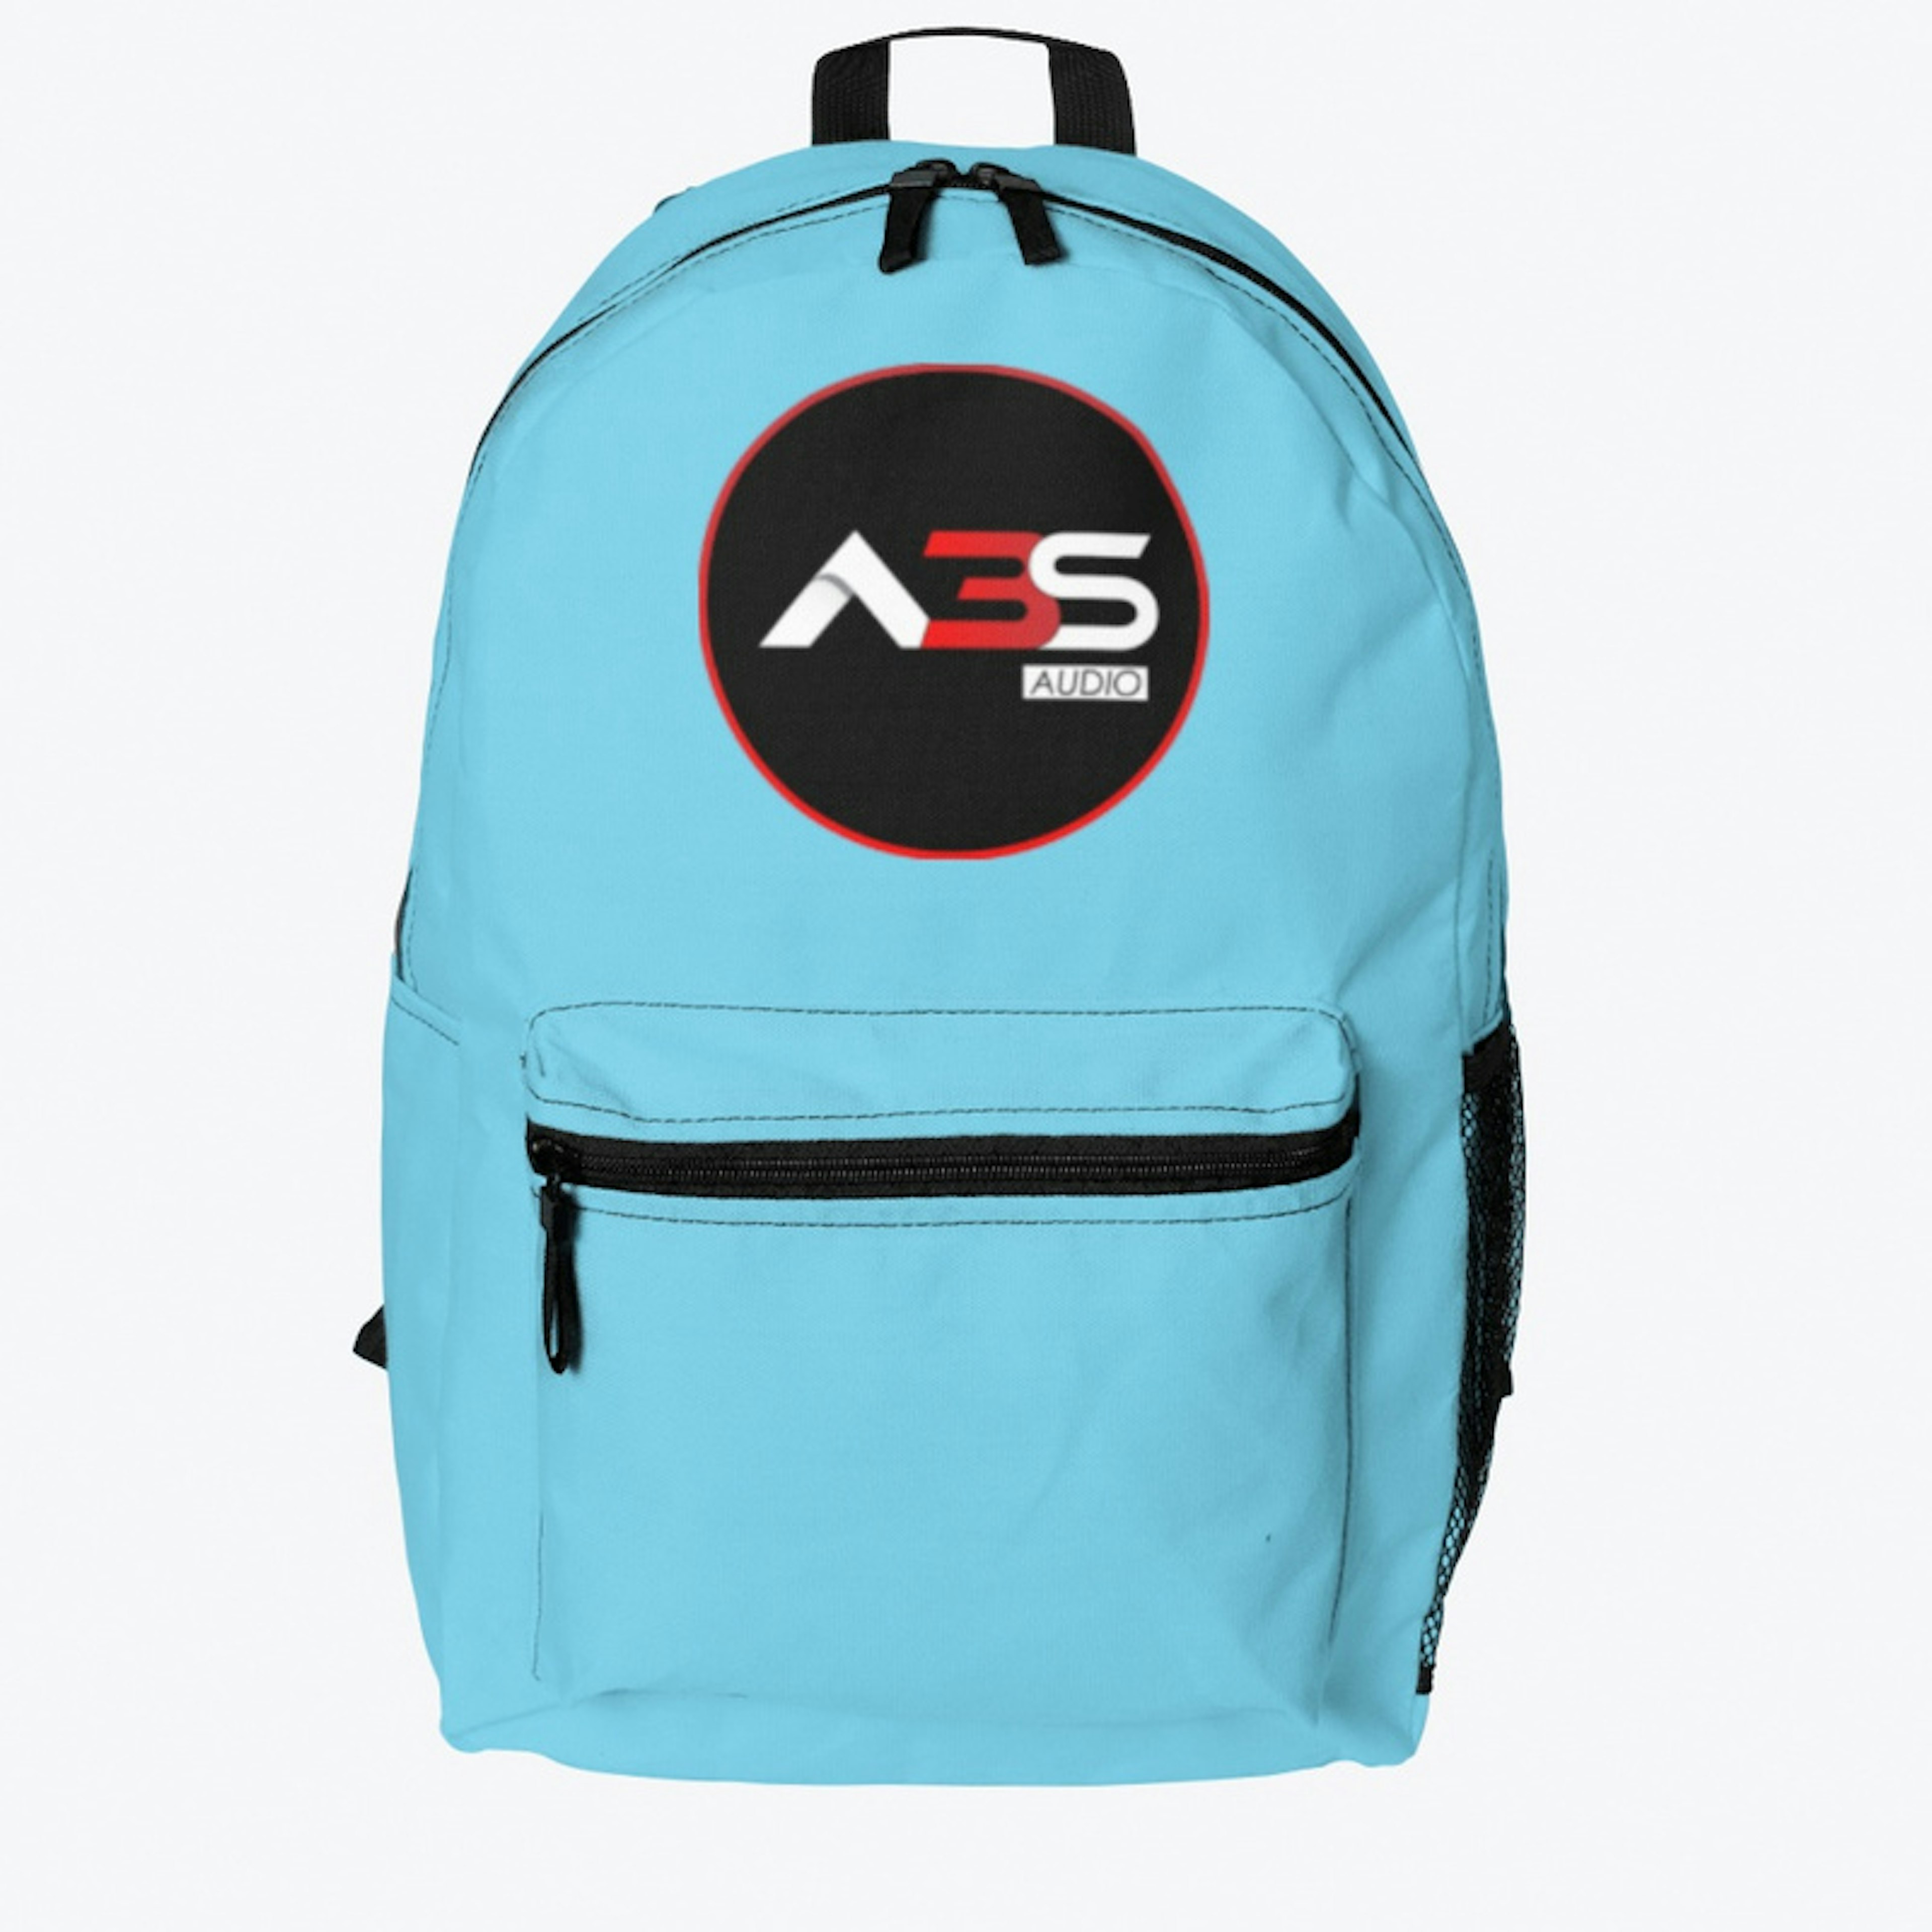 A3S Audio - Logo